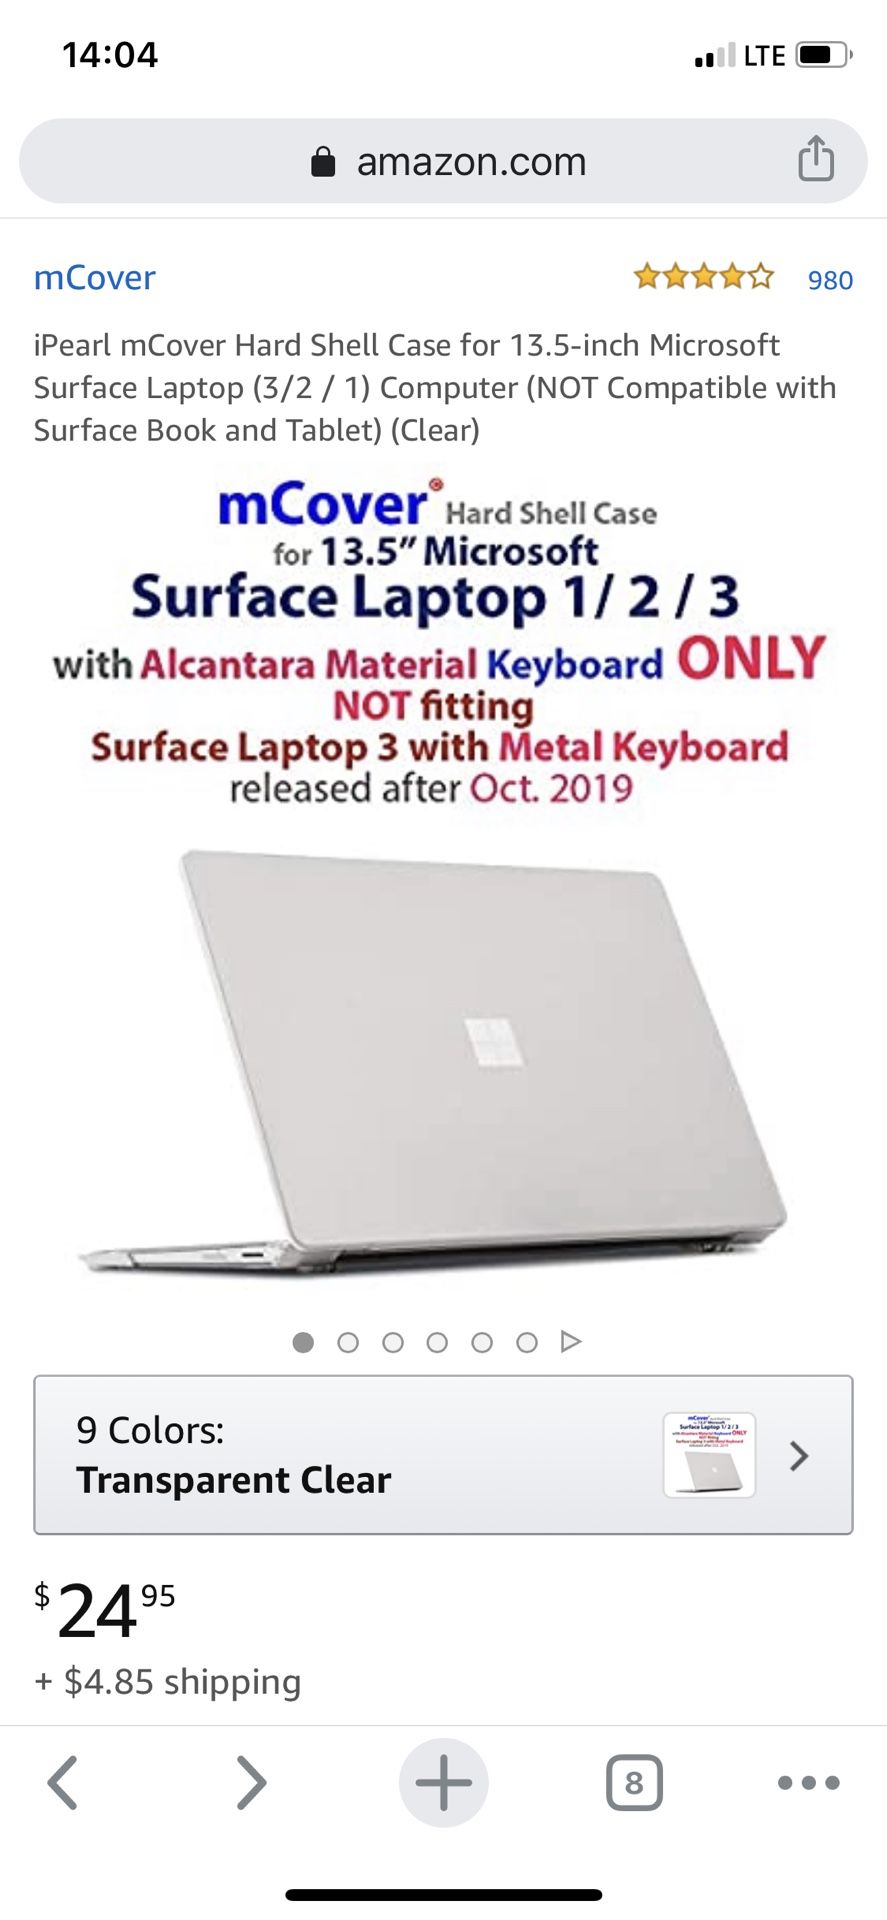 iPearl mCover Hard Shell Case for 13.5-inch Microsoft Surface Laptop (3/2/1) Computer alcantara keyboard